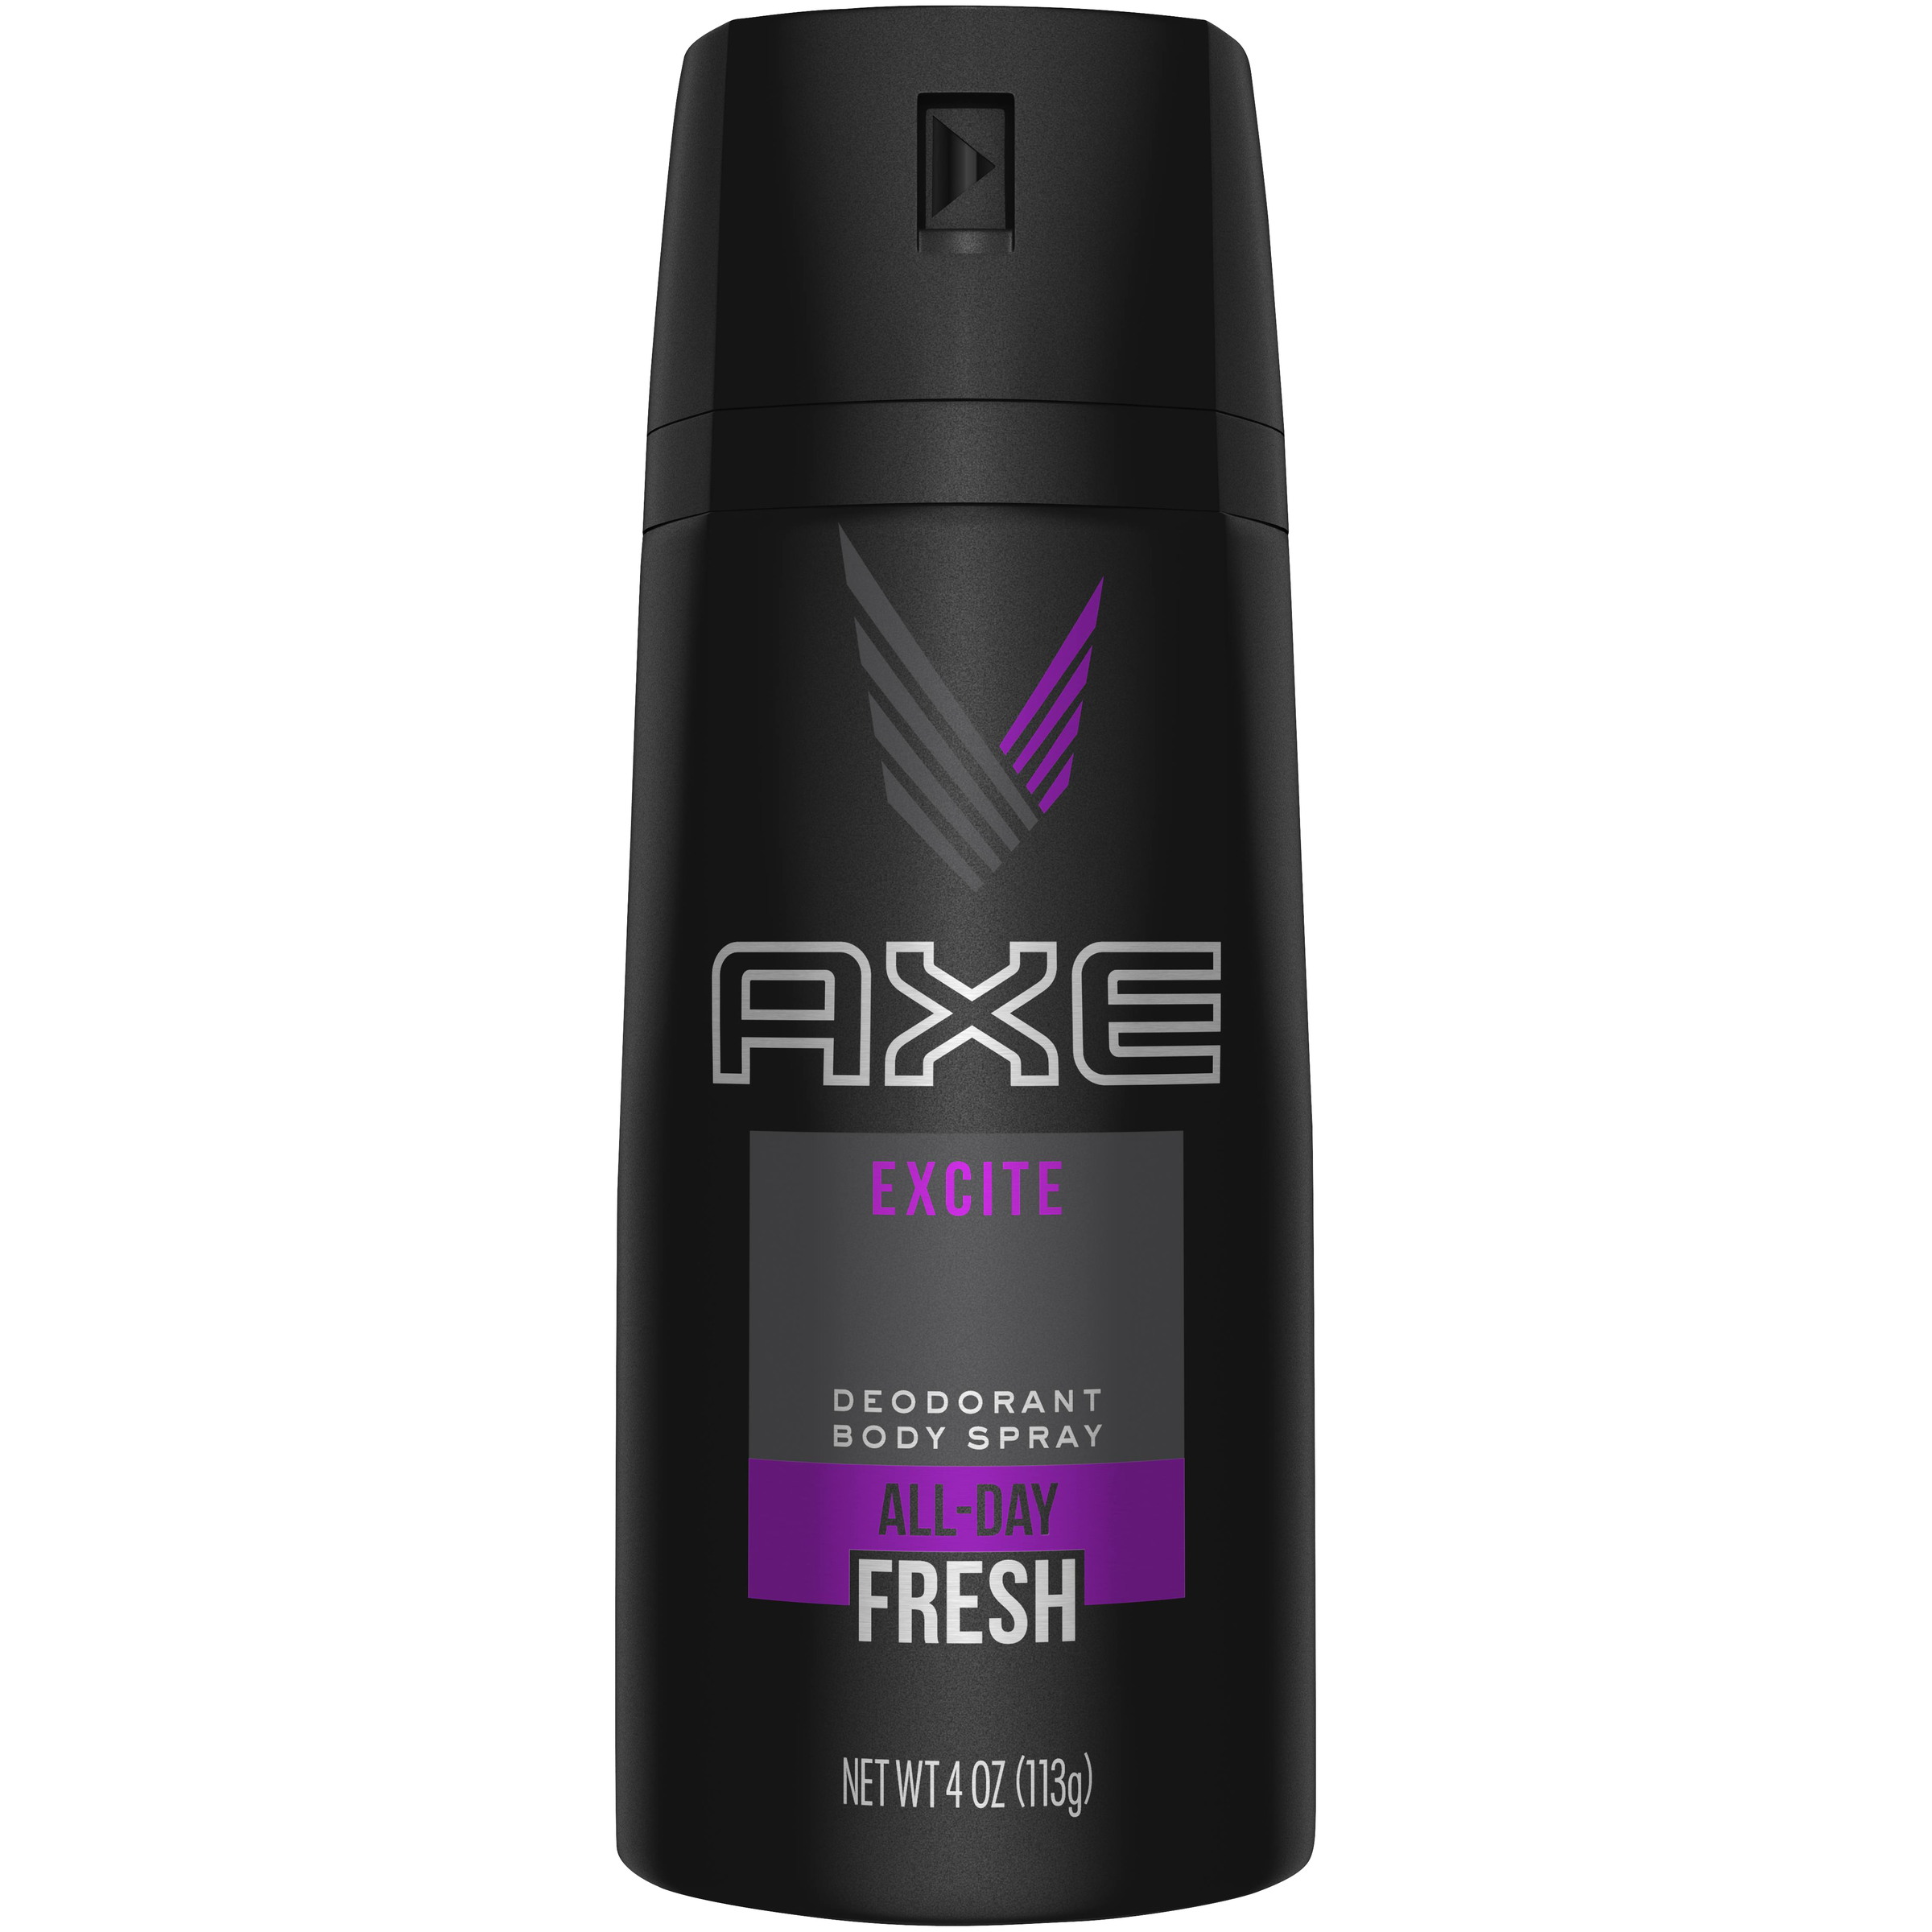 AXE Deodorant Bodyspray, Excite, 4 oz (113 g)